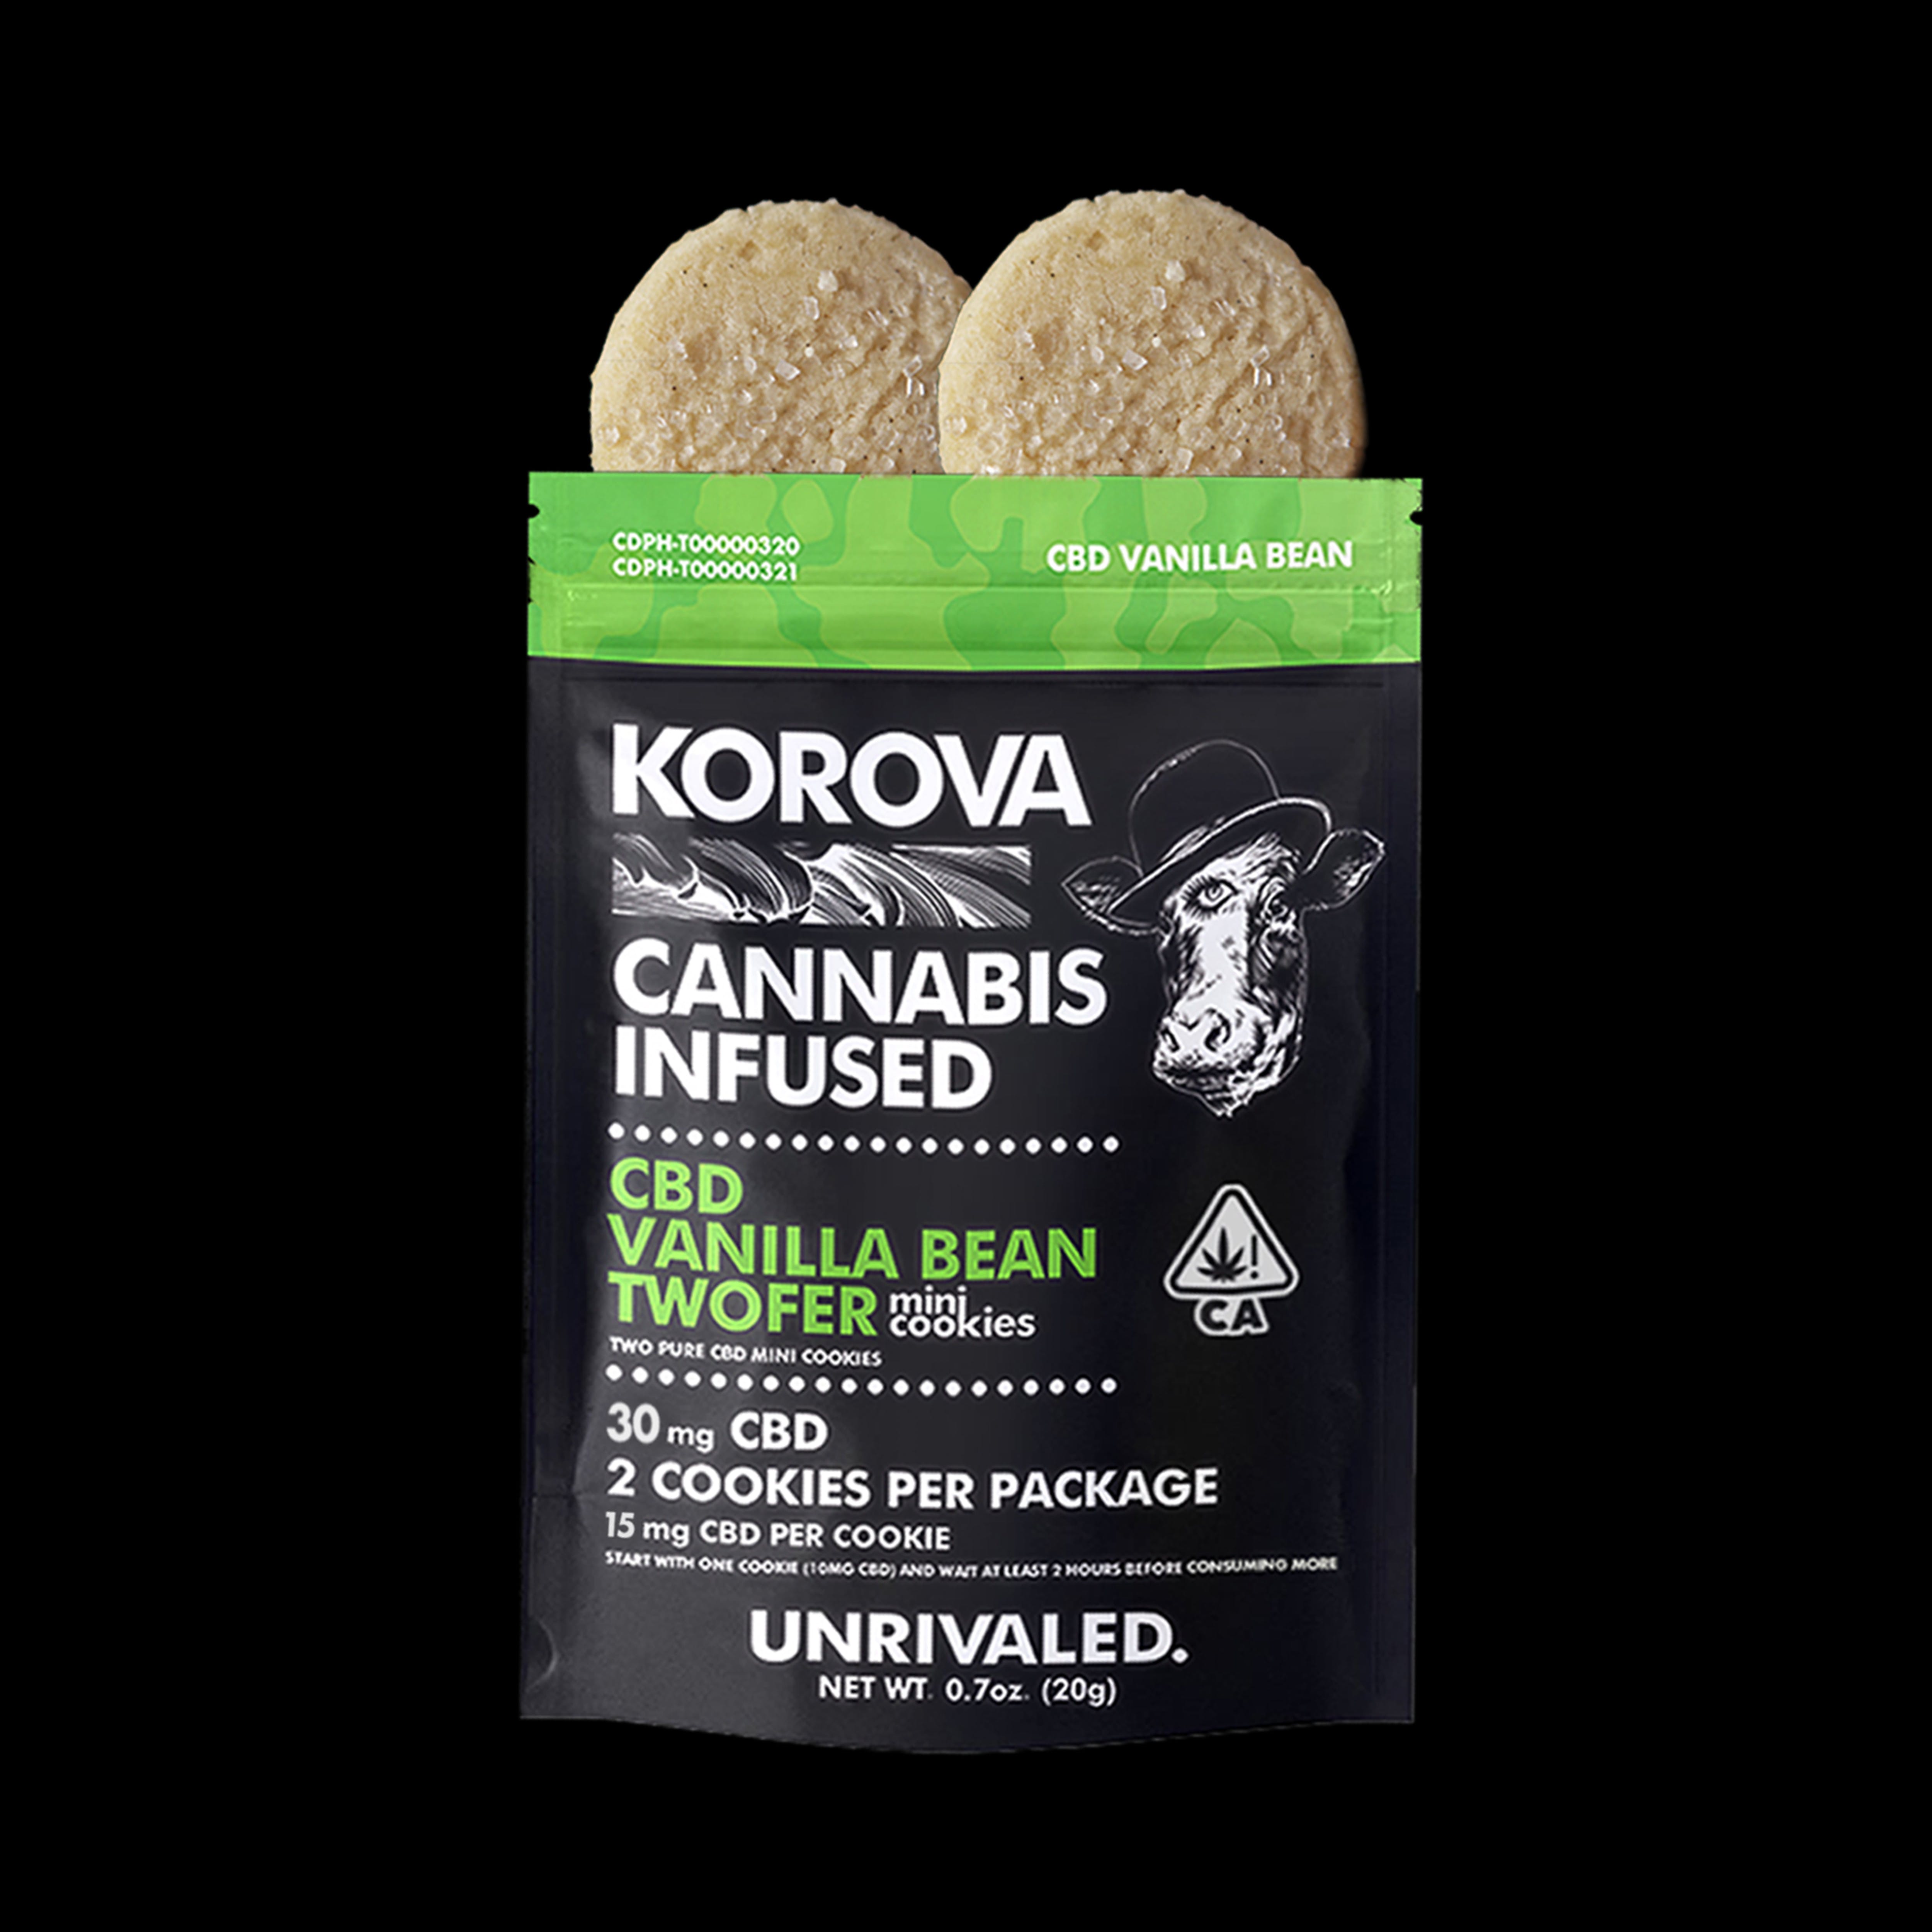 marijuana-dispensaries-florin-wellness-center-in-sacramento-twofer-cbd-vanilla-bean-minis-30mg-cbd